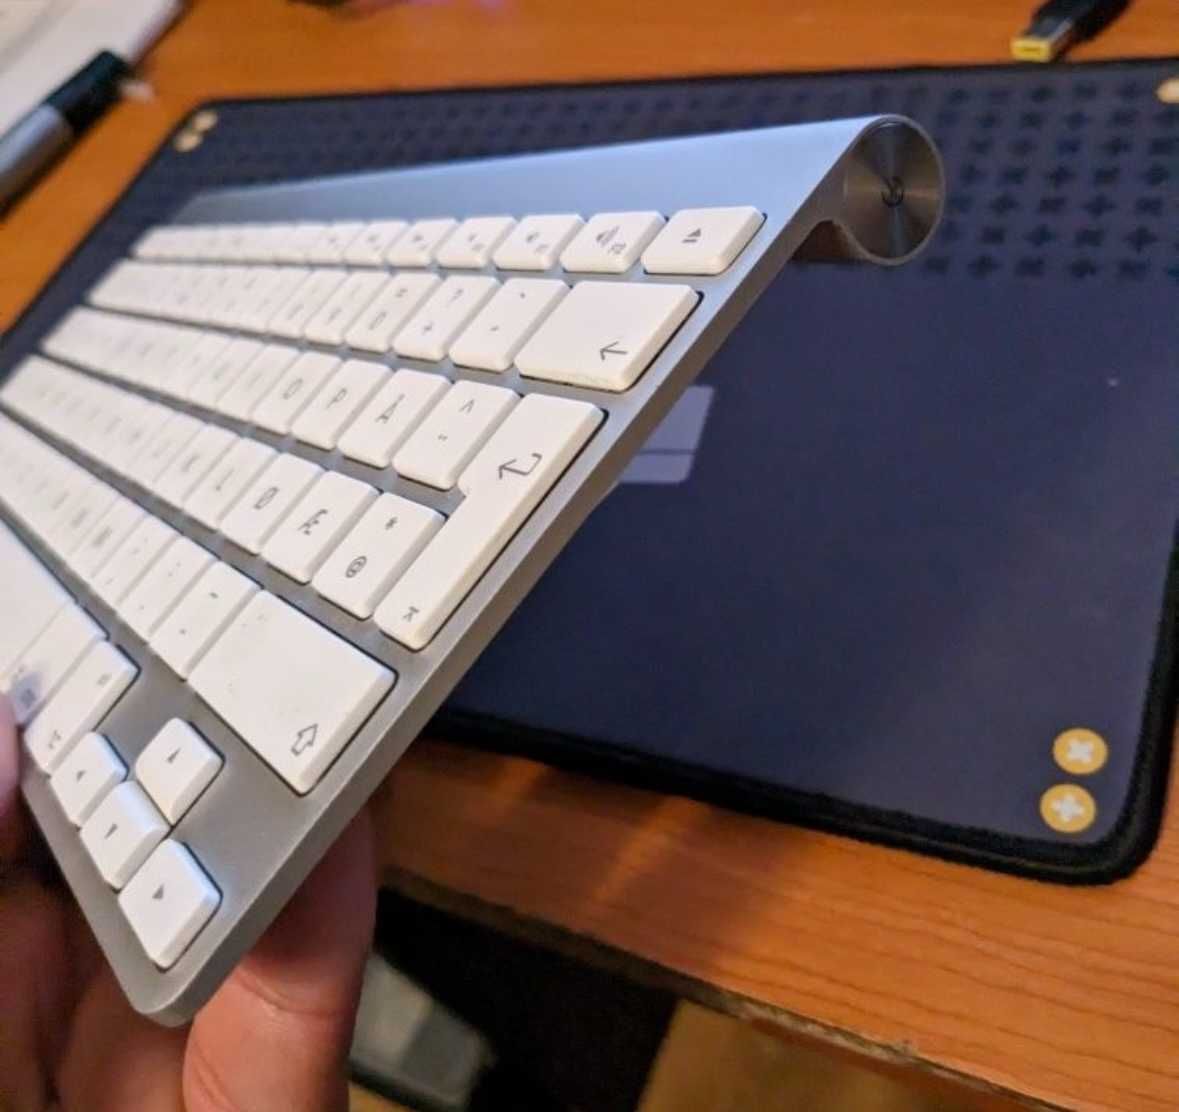 Tastatura Apple Wireless Keyboard A1314 cu probleme